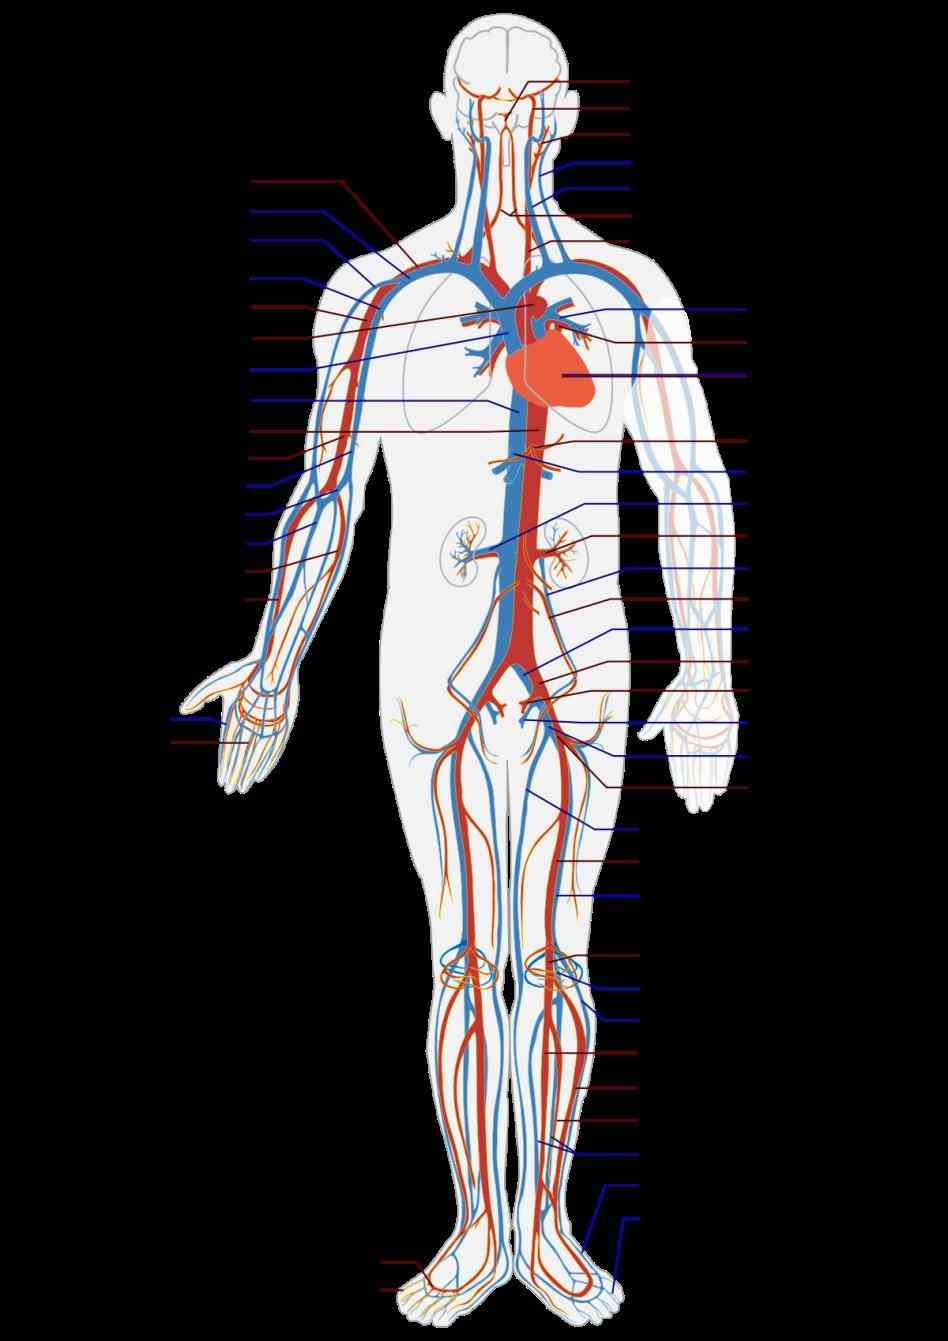 Heart Blood Vessels Diagram Anatomy | MedicineBTG.com